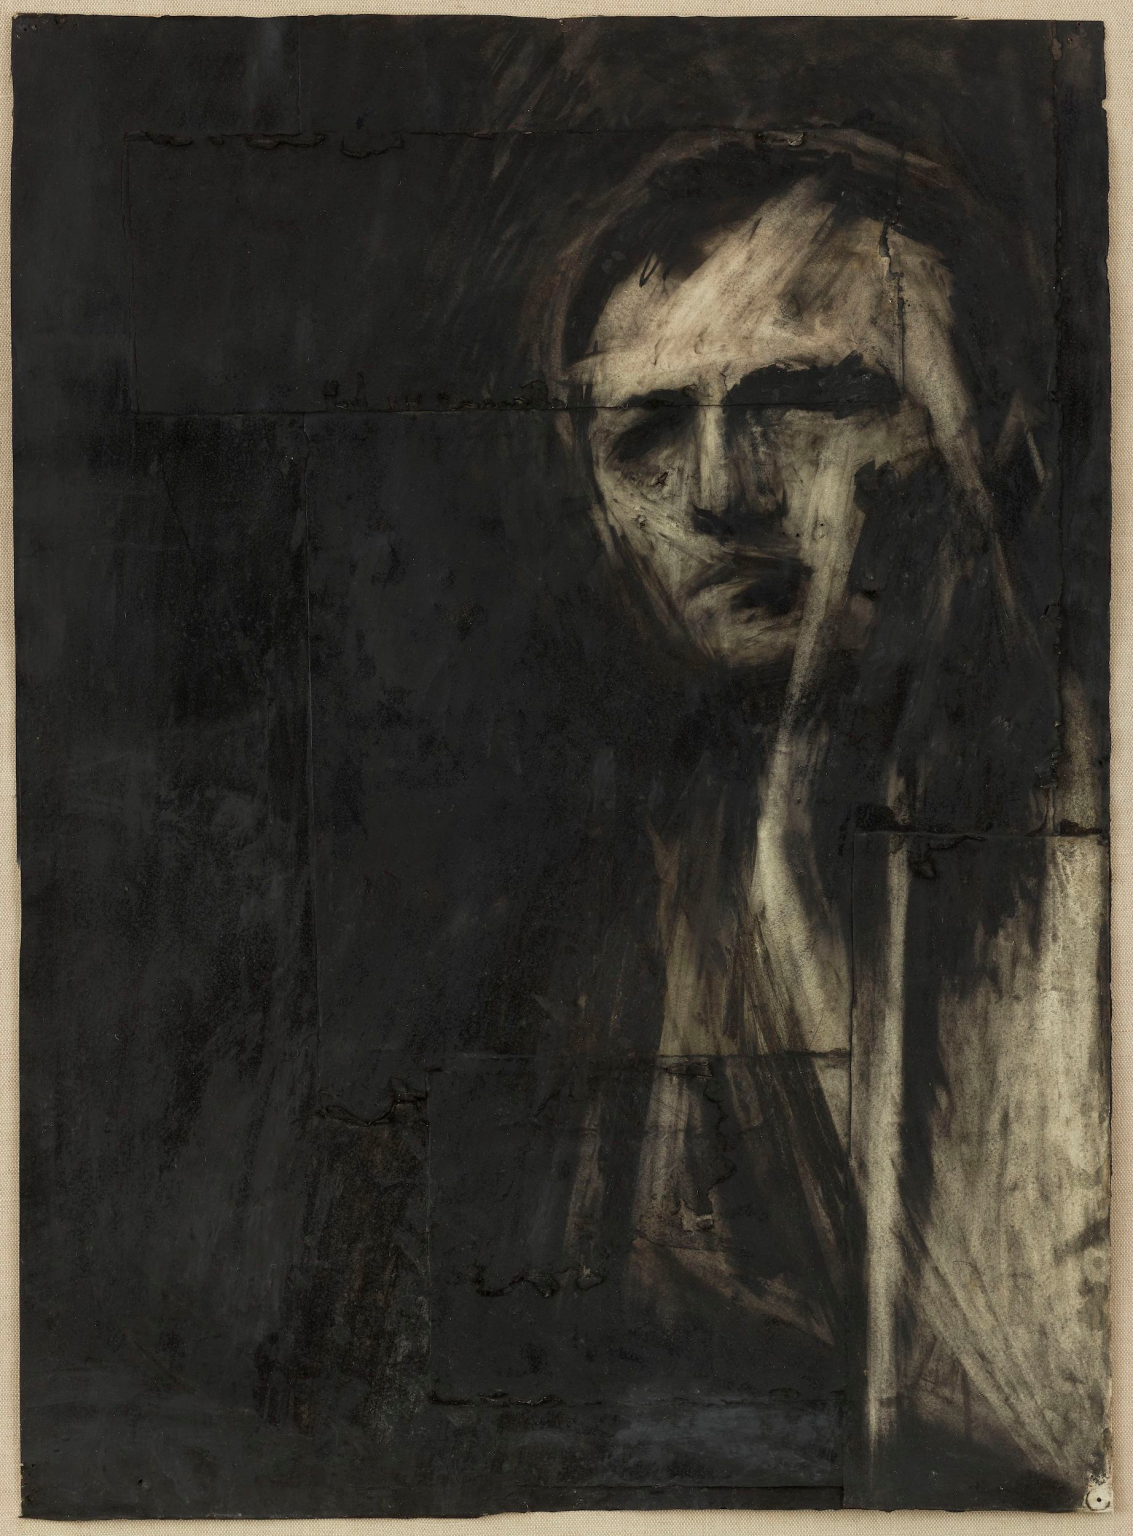 Frank Auerbach, Self-Portrait, kağıt üzerine kömür ve tebeşir, 30 x 21 3/4 inç, 1959, The Charcoal Heads, The Courtauld Gallery, Fotoğraf: courtesy of Frankie Rossi Art Projects, London